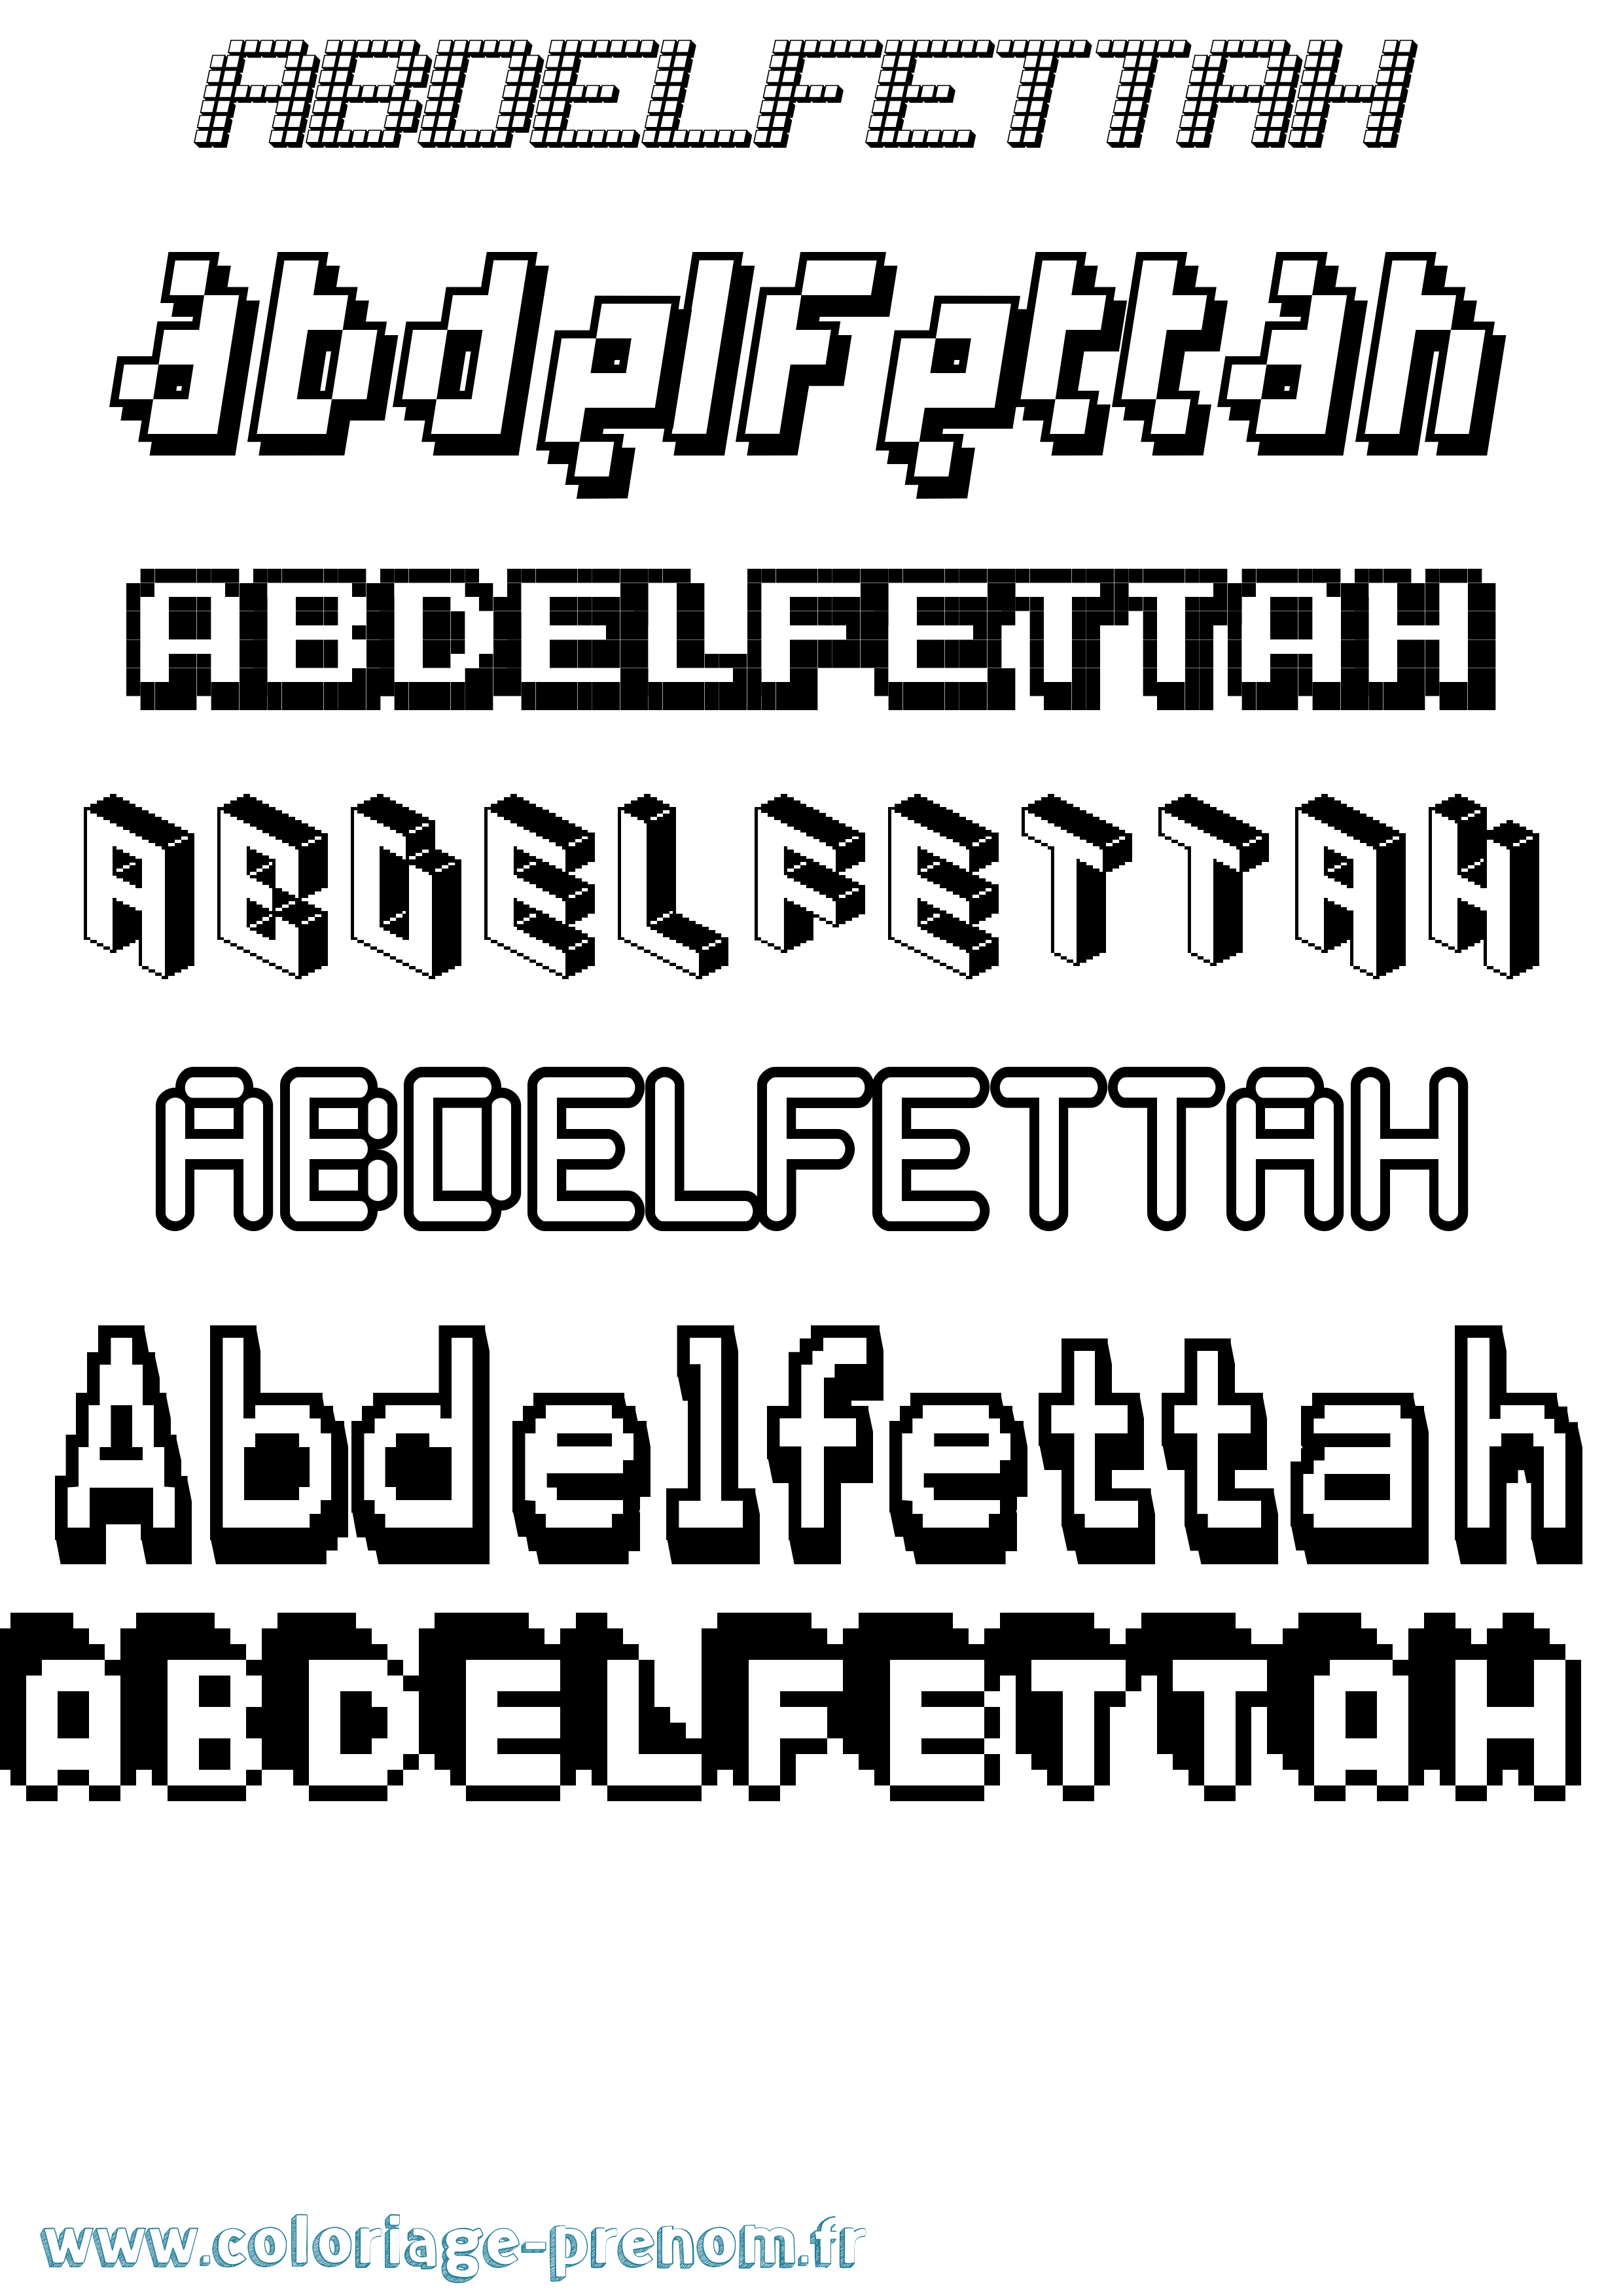 Coloriage prénom Abdelfettah Pixel